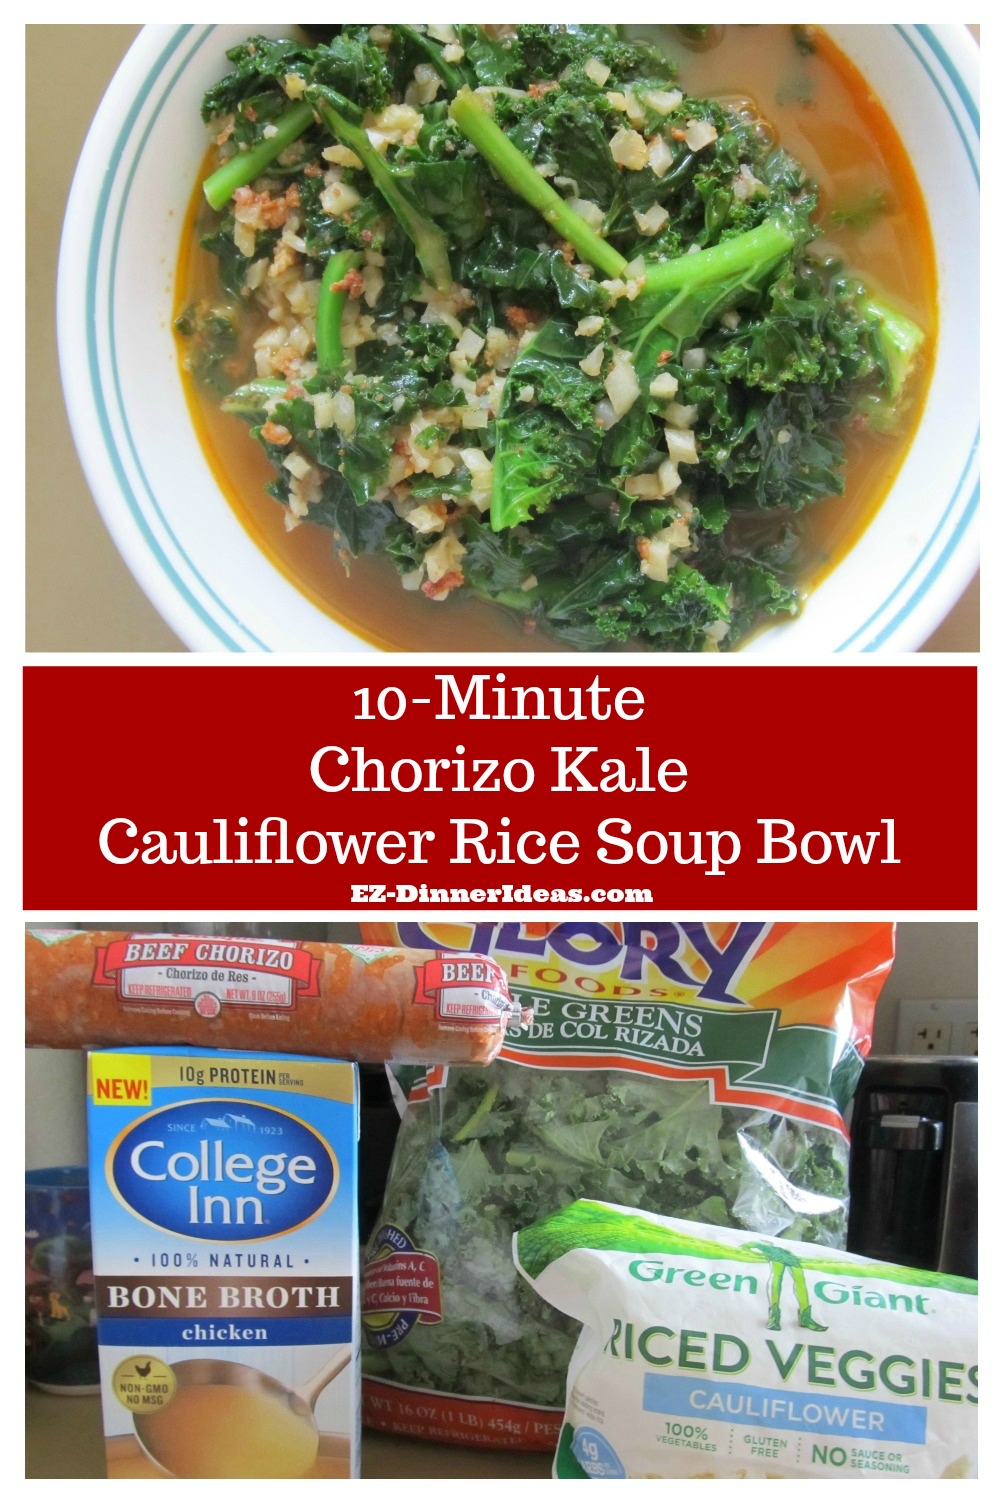 Sausage Kale Soup Recipe|10-Minute Chorizo Kale Cauliflower Rice Soup